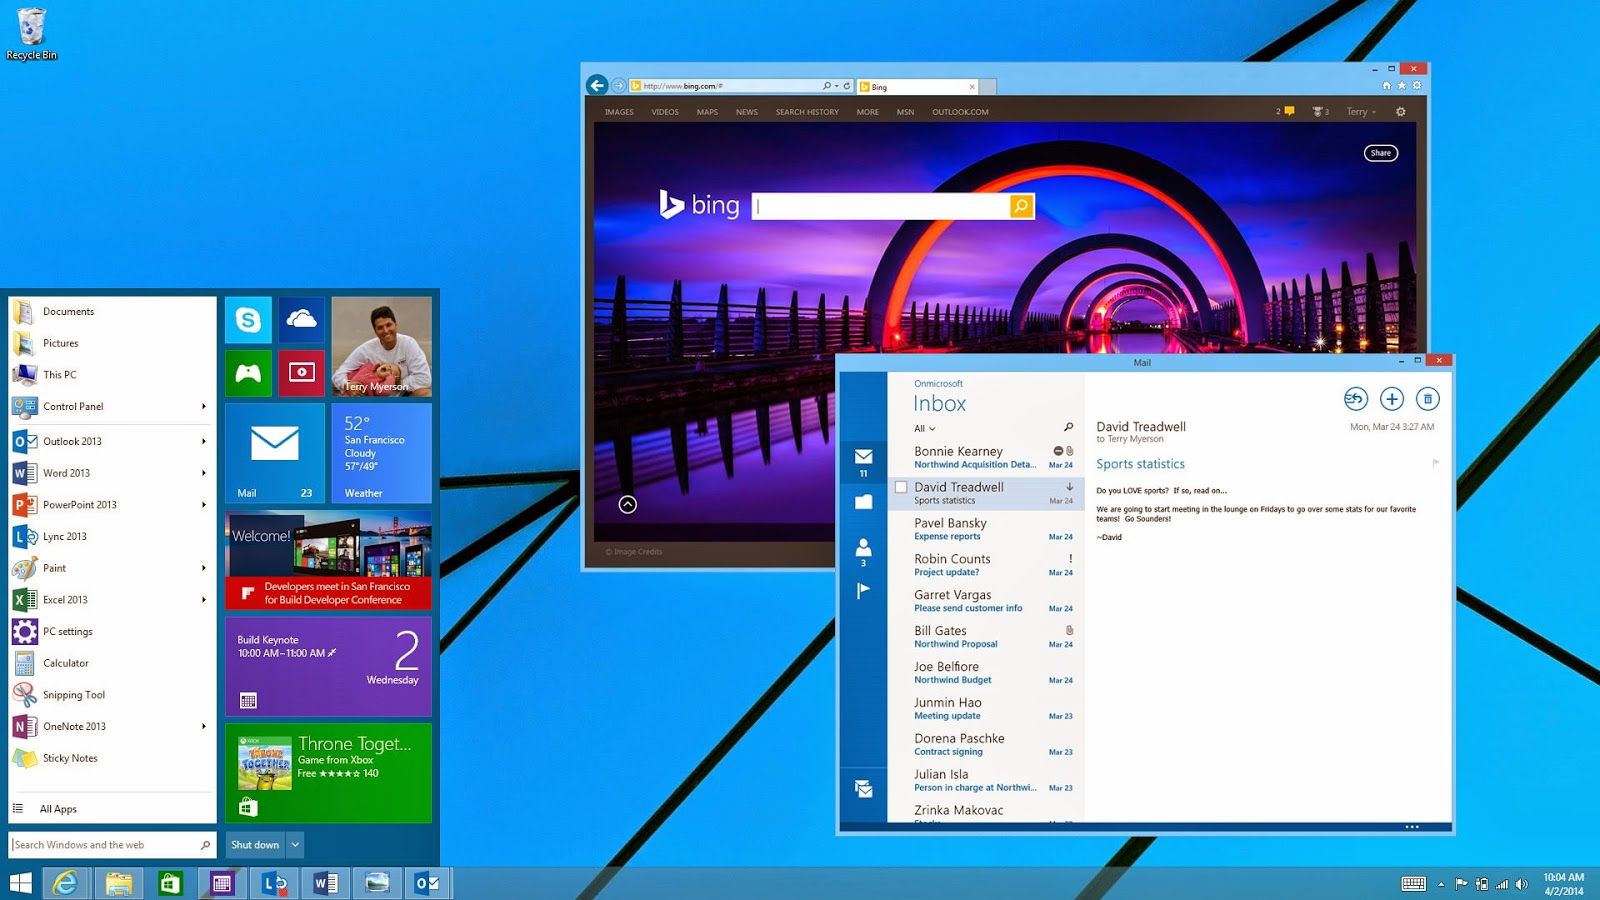 Windows 10 Operating System